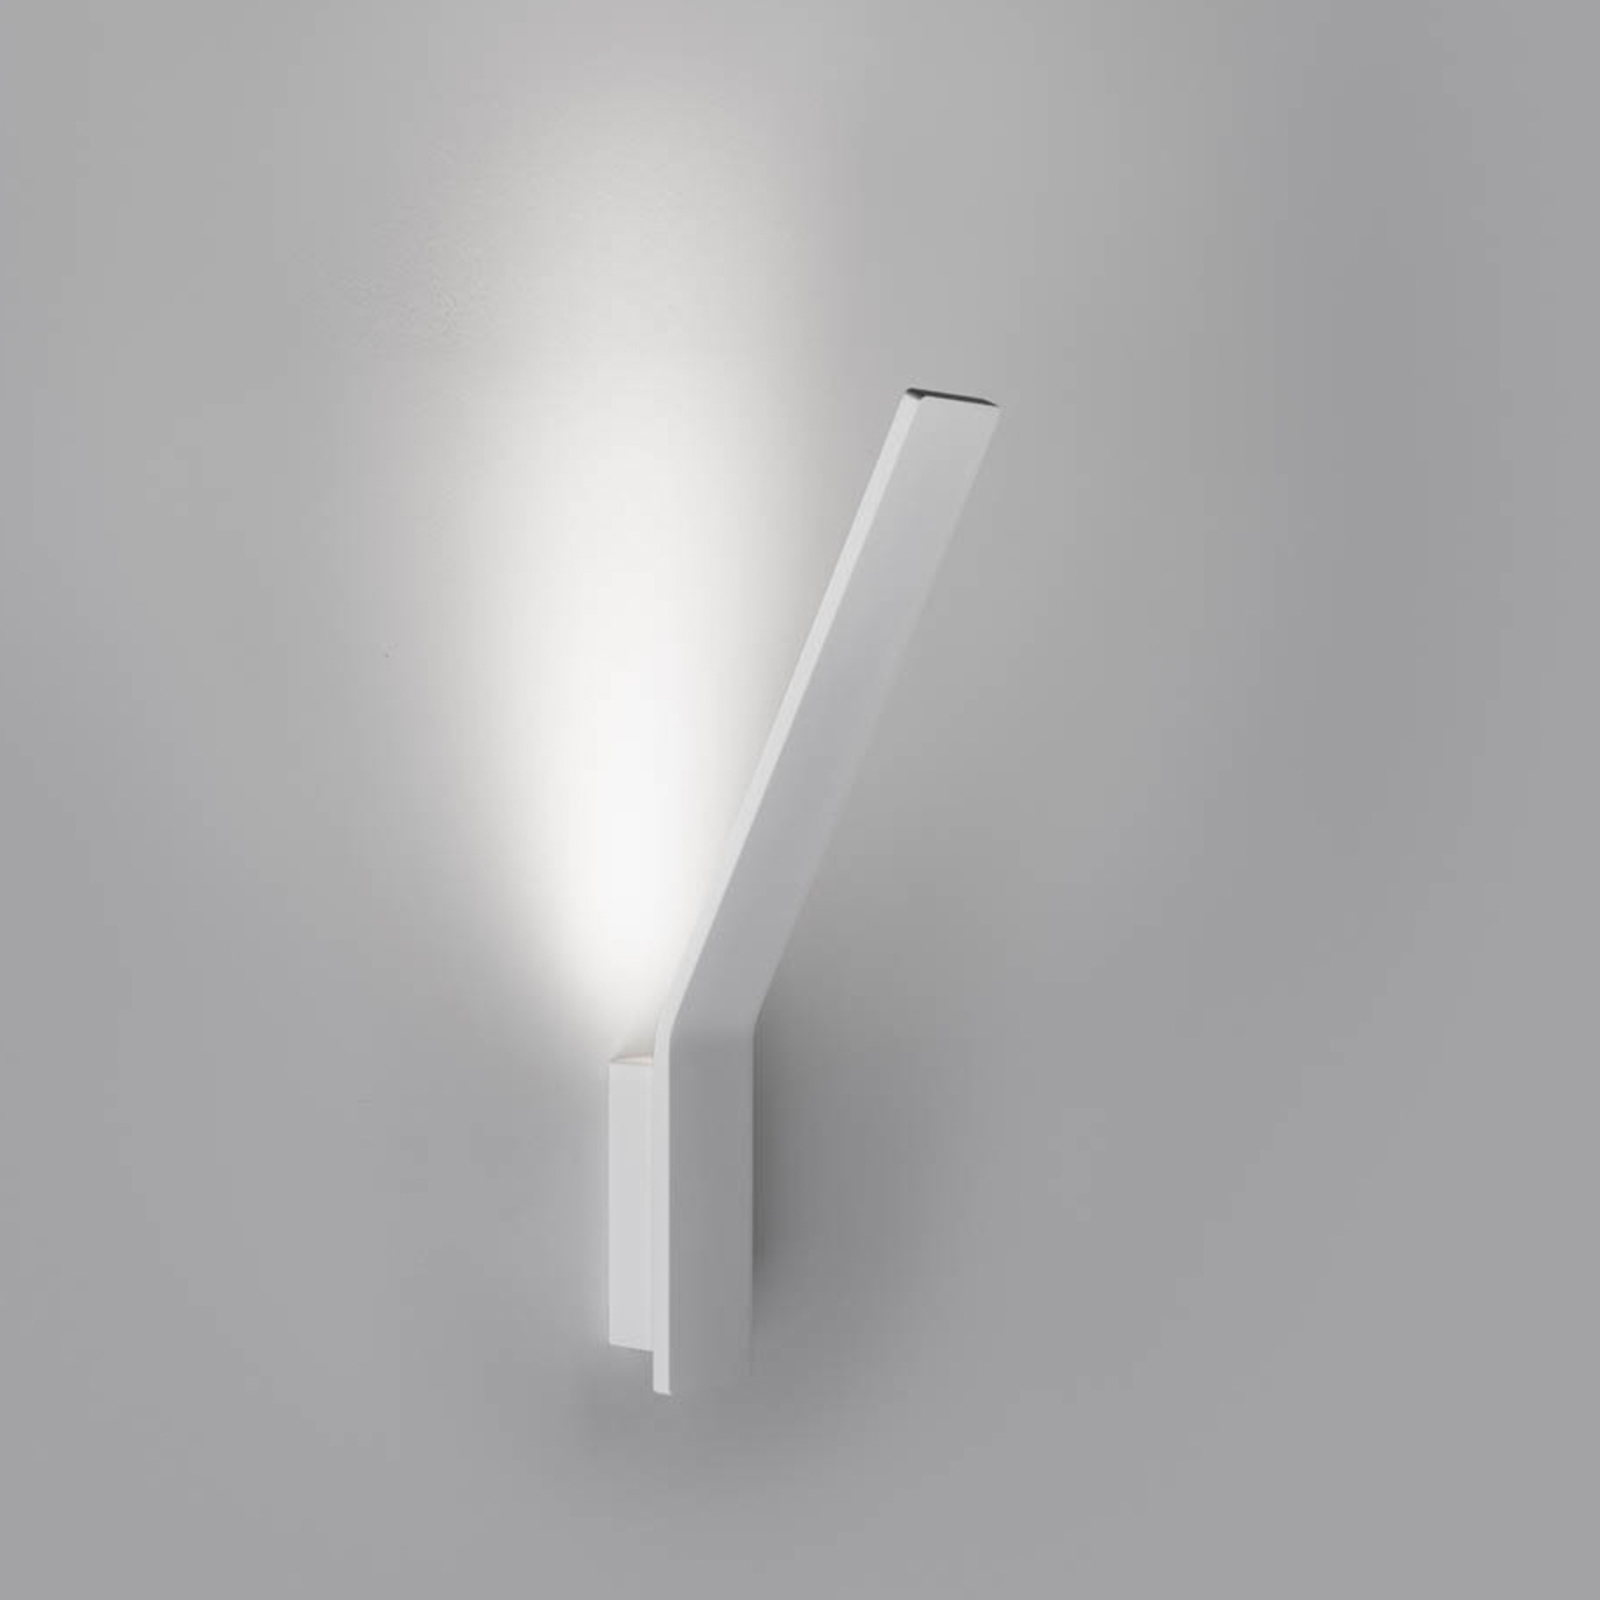 Stilnovo Lama LED wall light, 3,000 K, white